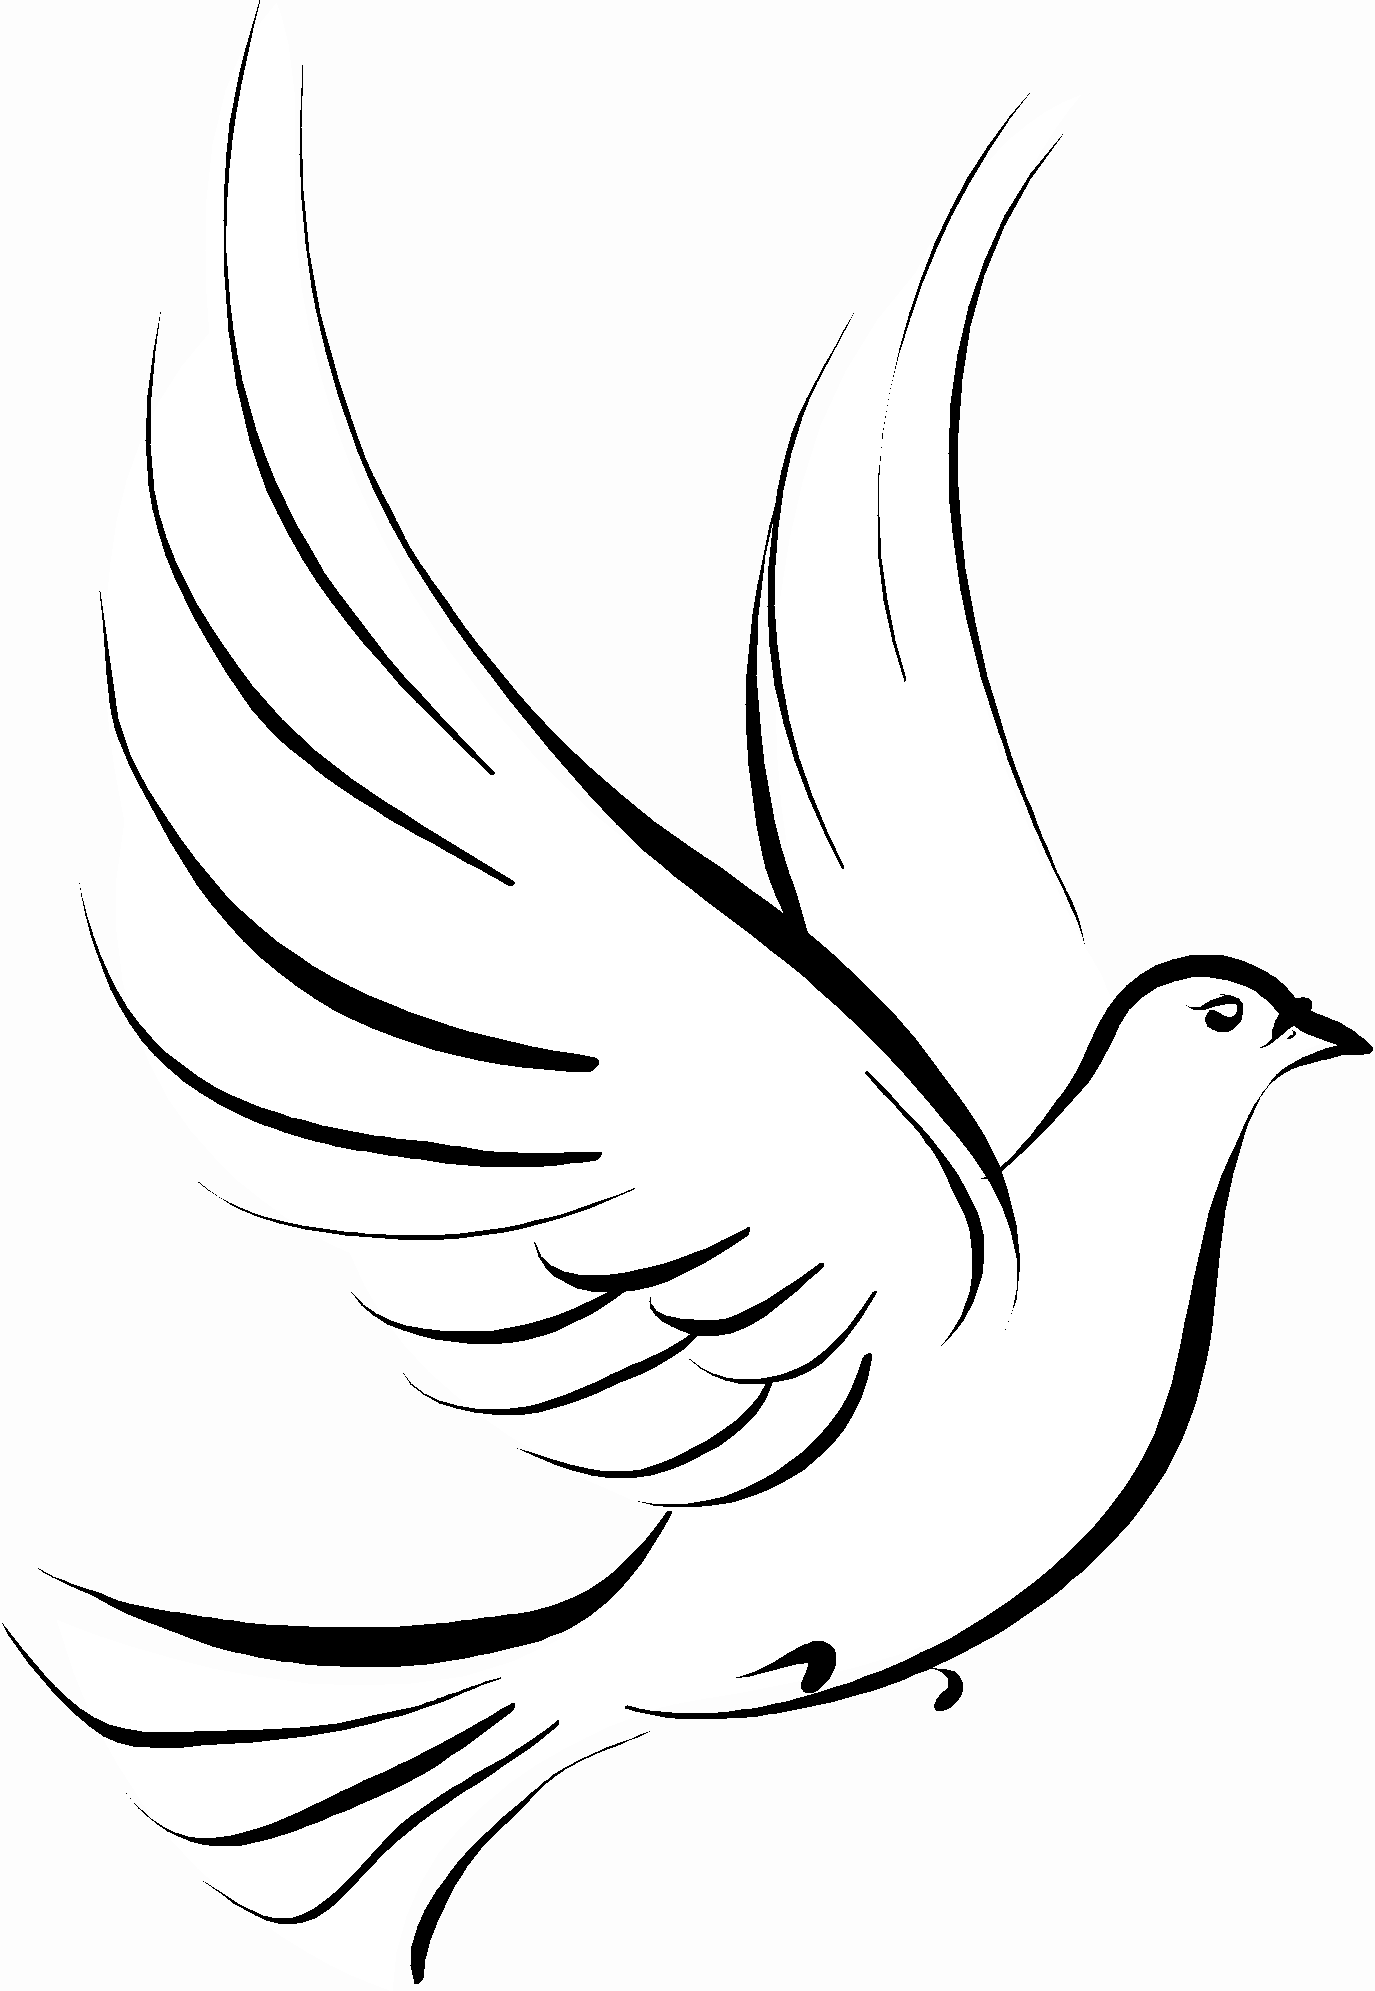 Dove of peace vector